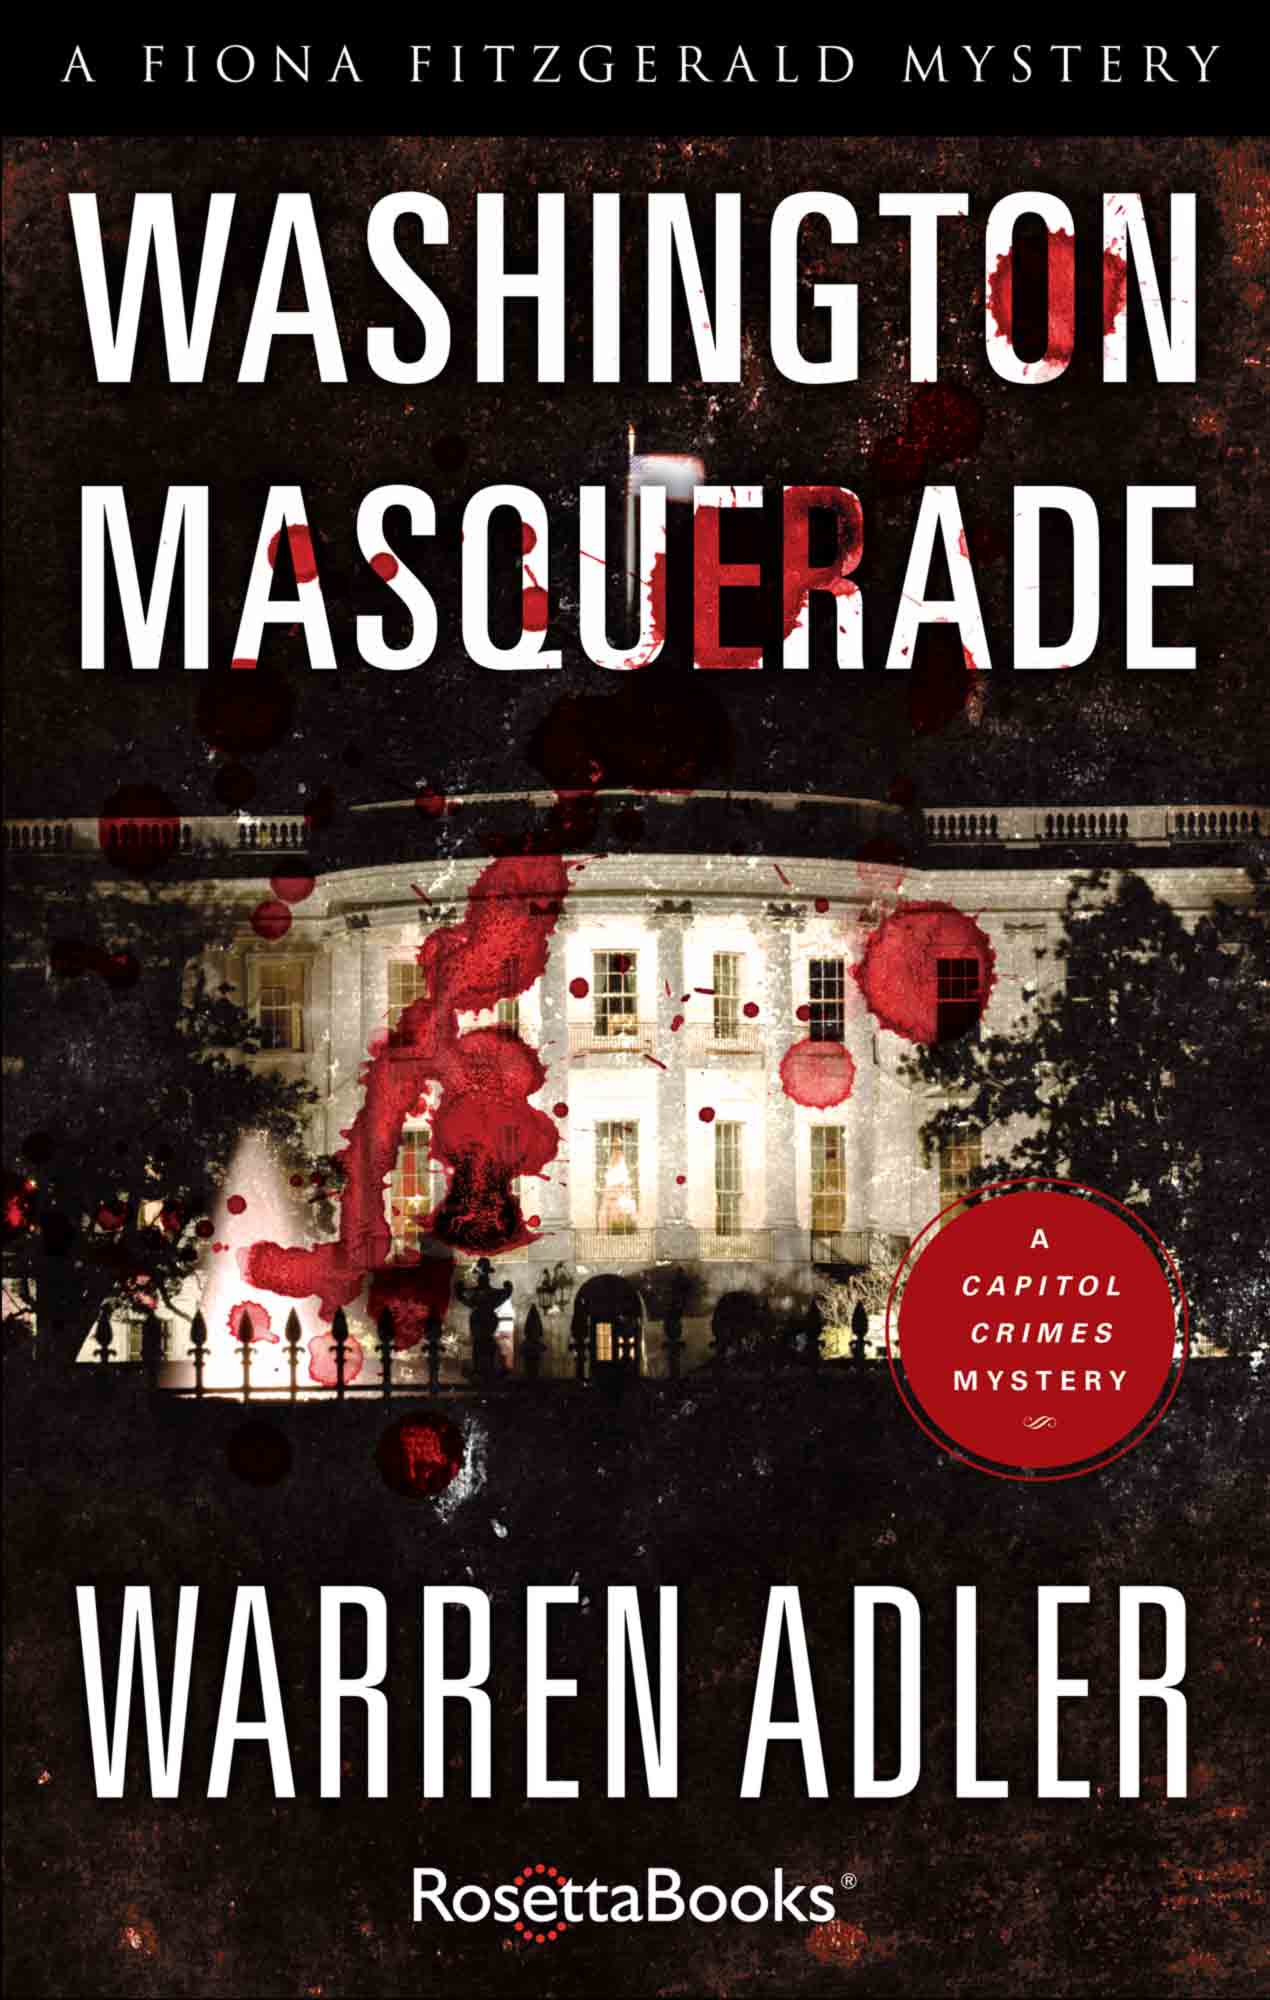 Washington Masquerade by Warren Adler